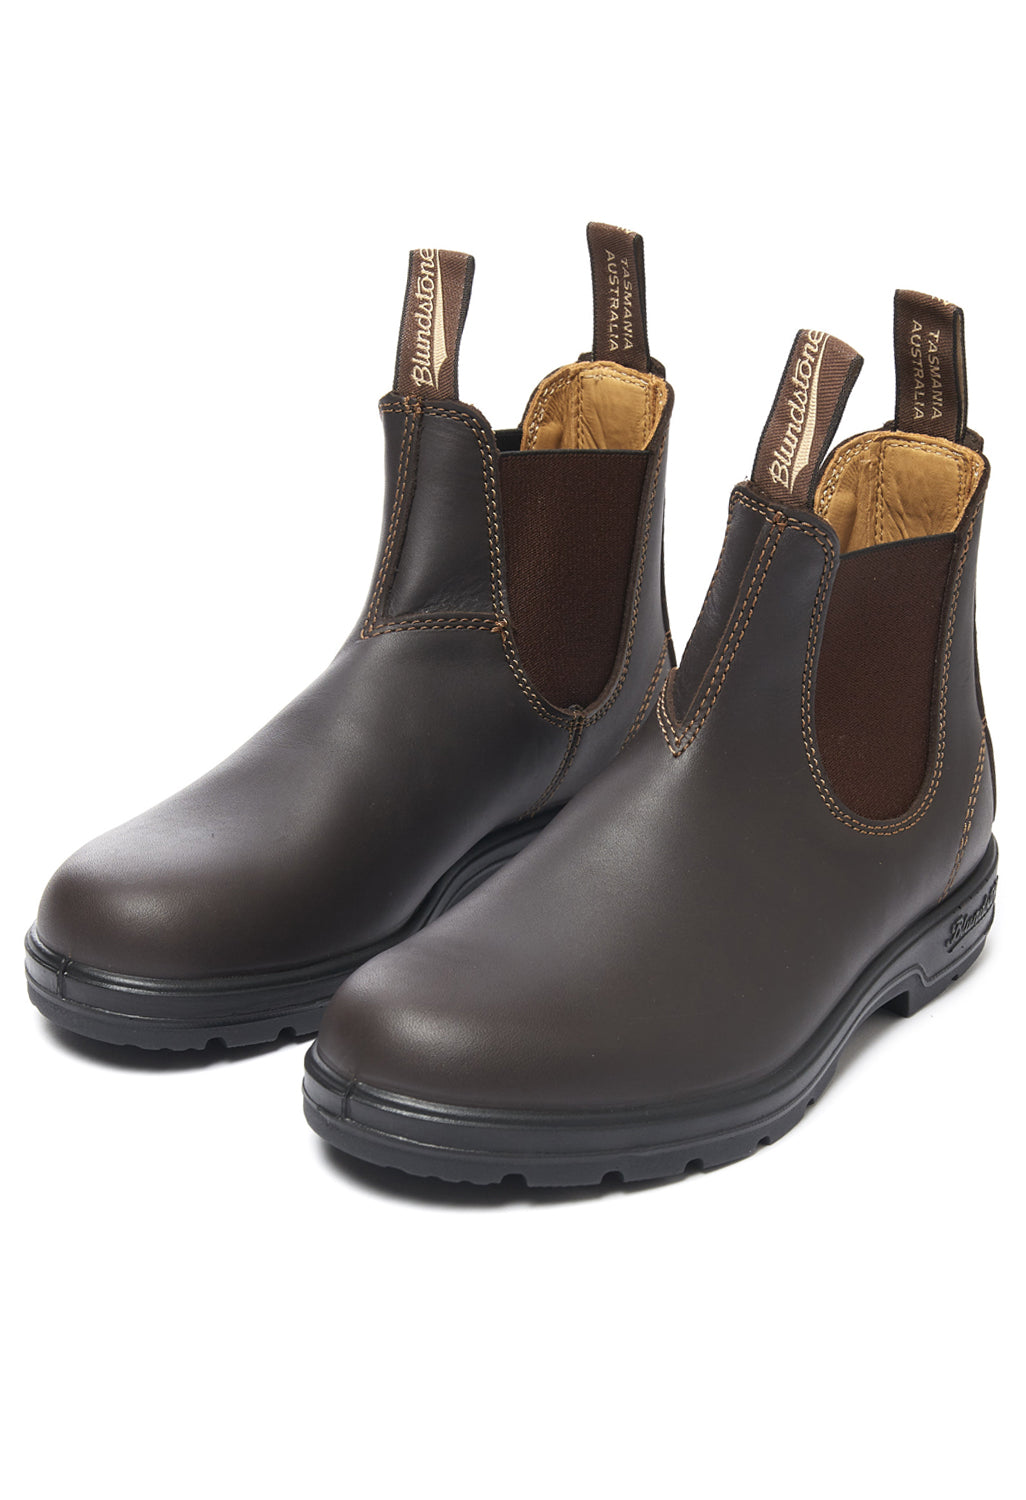 Blundstone 550 Boots - Walnut Brown